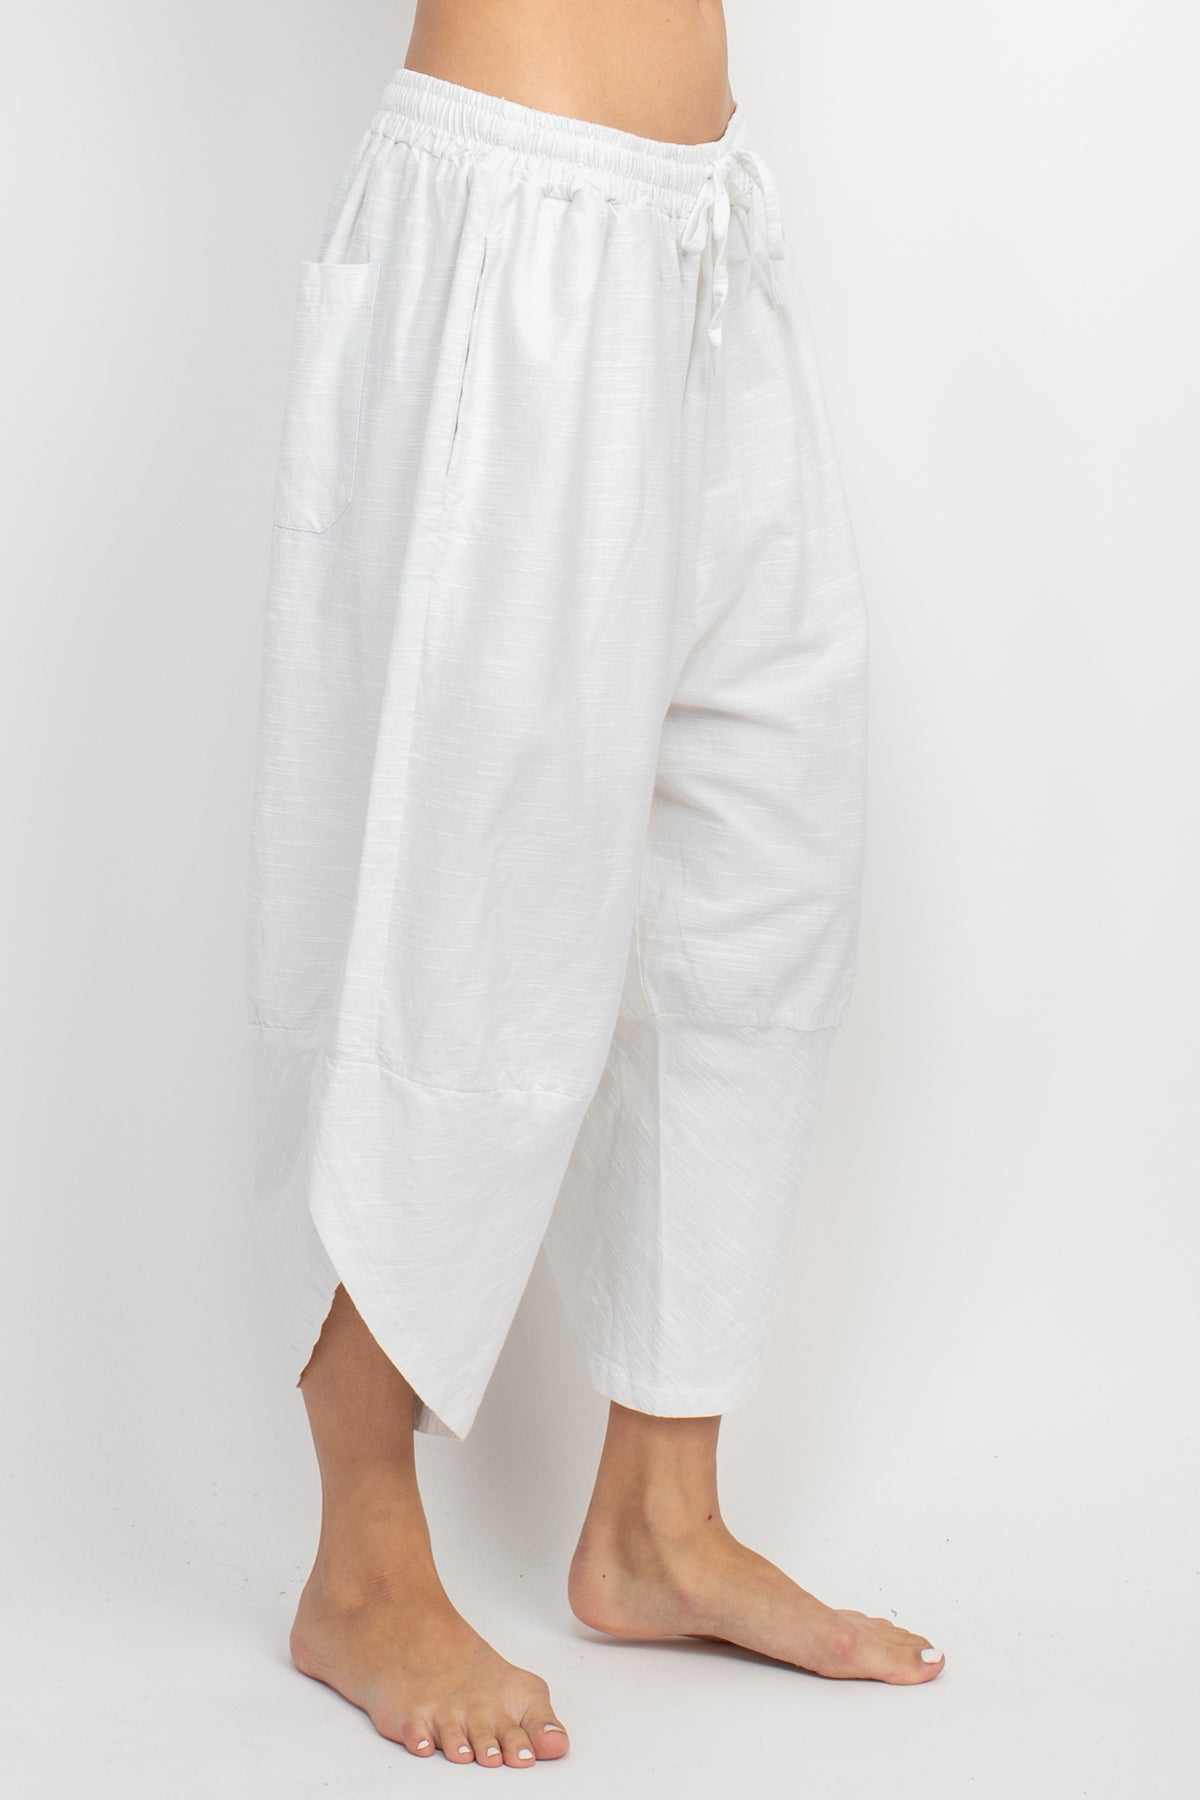 Buy Viku Women's Stylish Cotton Harem Pants, Free Size, Brown at Amazon.in